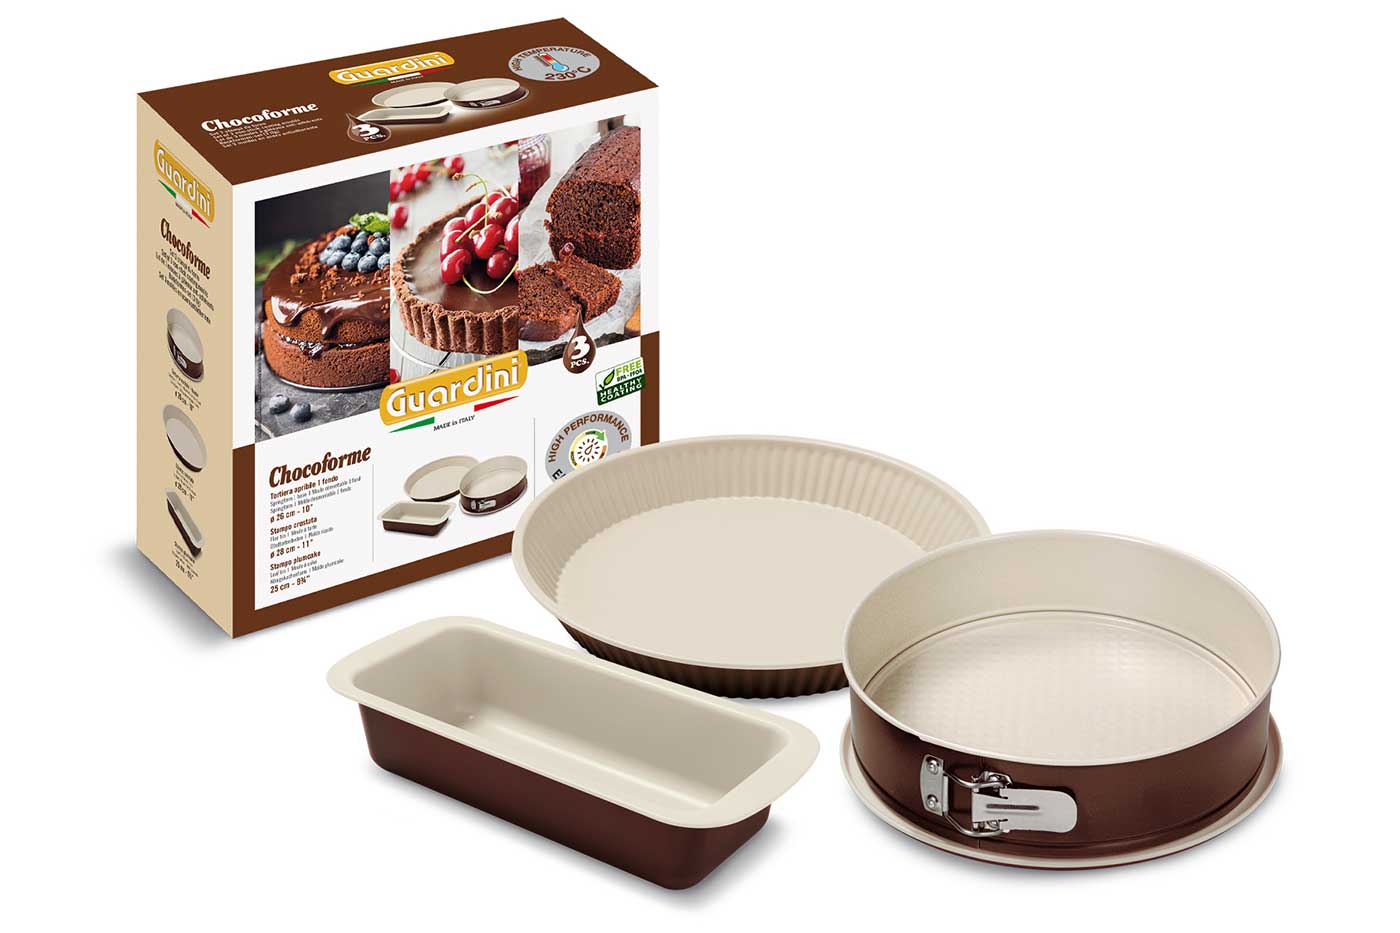 Molde para Plumcake Guardini Material: Acero con Revestimiento Antiadherente Chocoforme 25x11 cm Color Beige-chocolate 